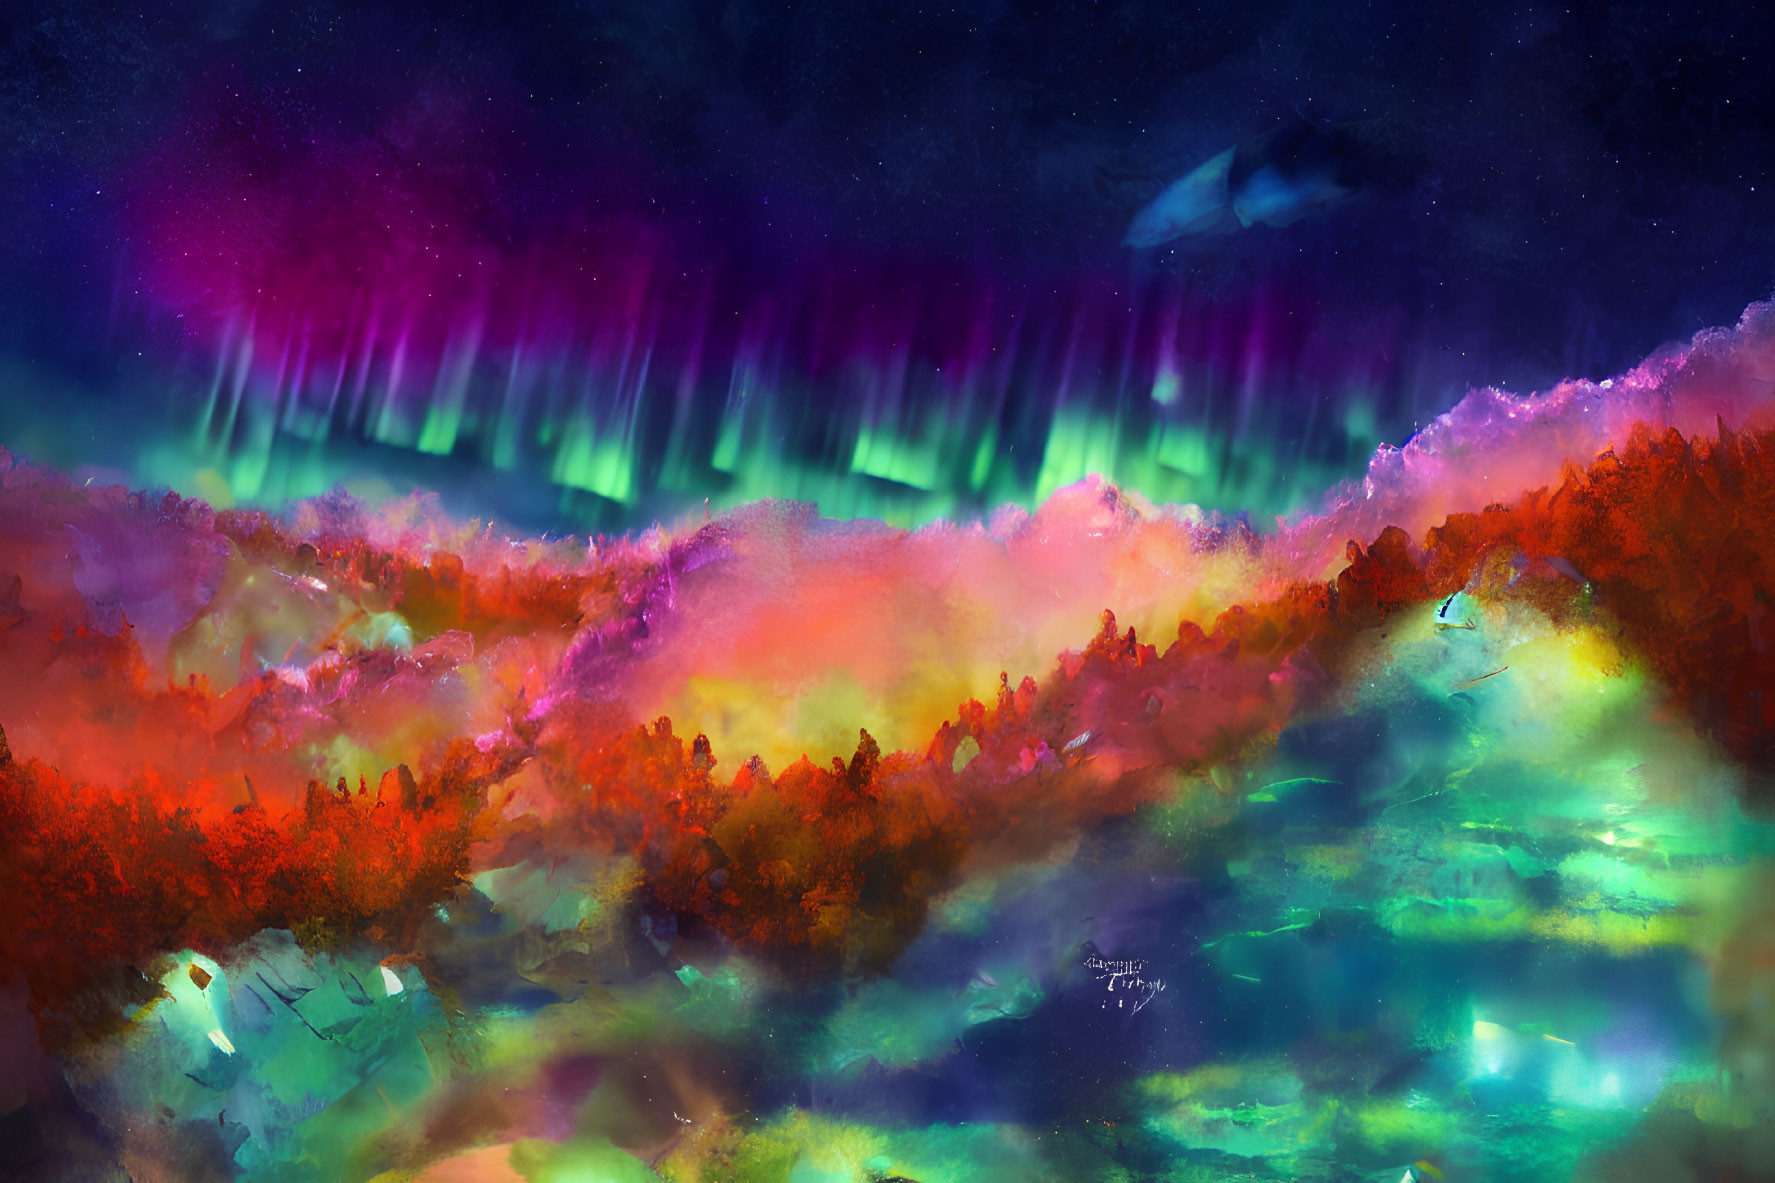 Vivid Aurora Borealis Over Luminous Forest with Spaceship Silhouette